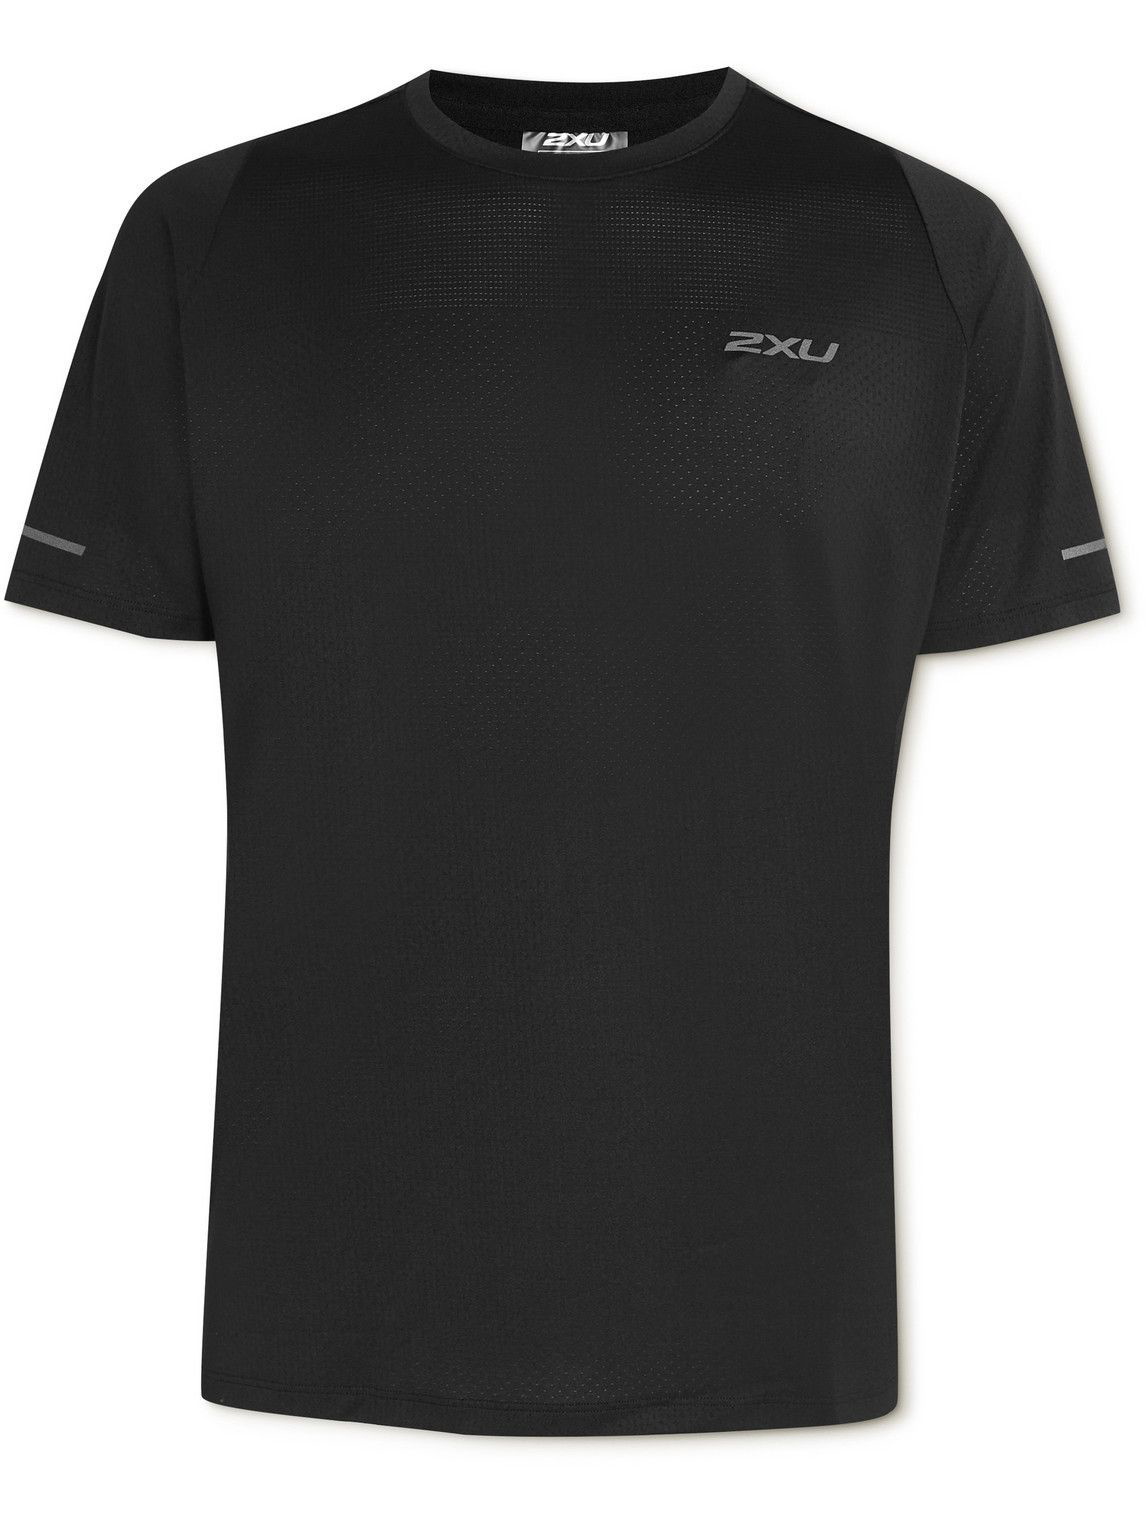 2XU - Light Speed X-LITE T-Shirt - Black 2XU